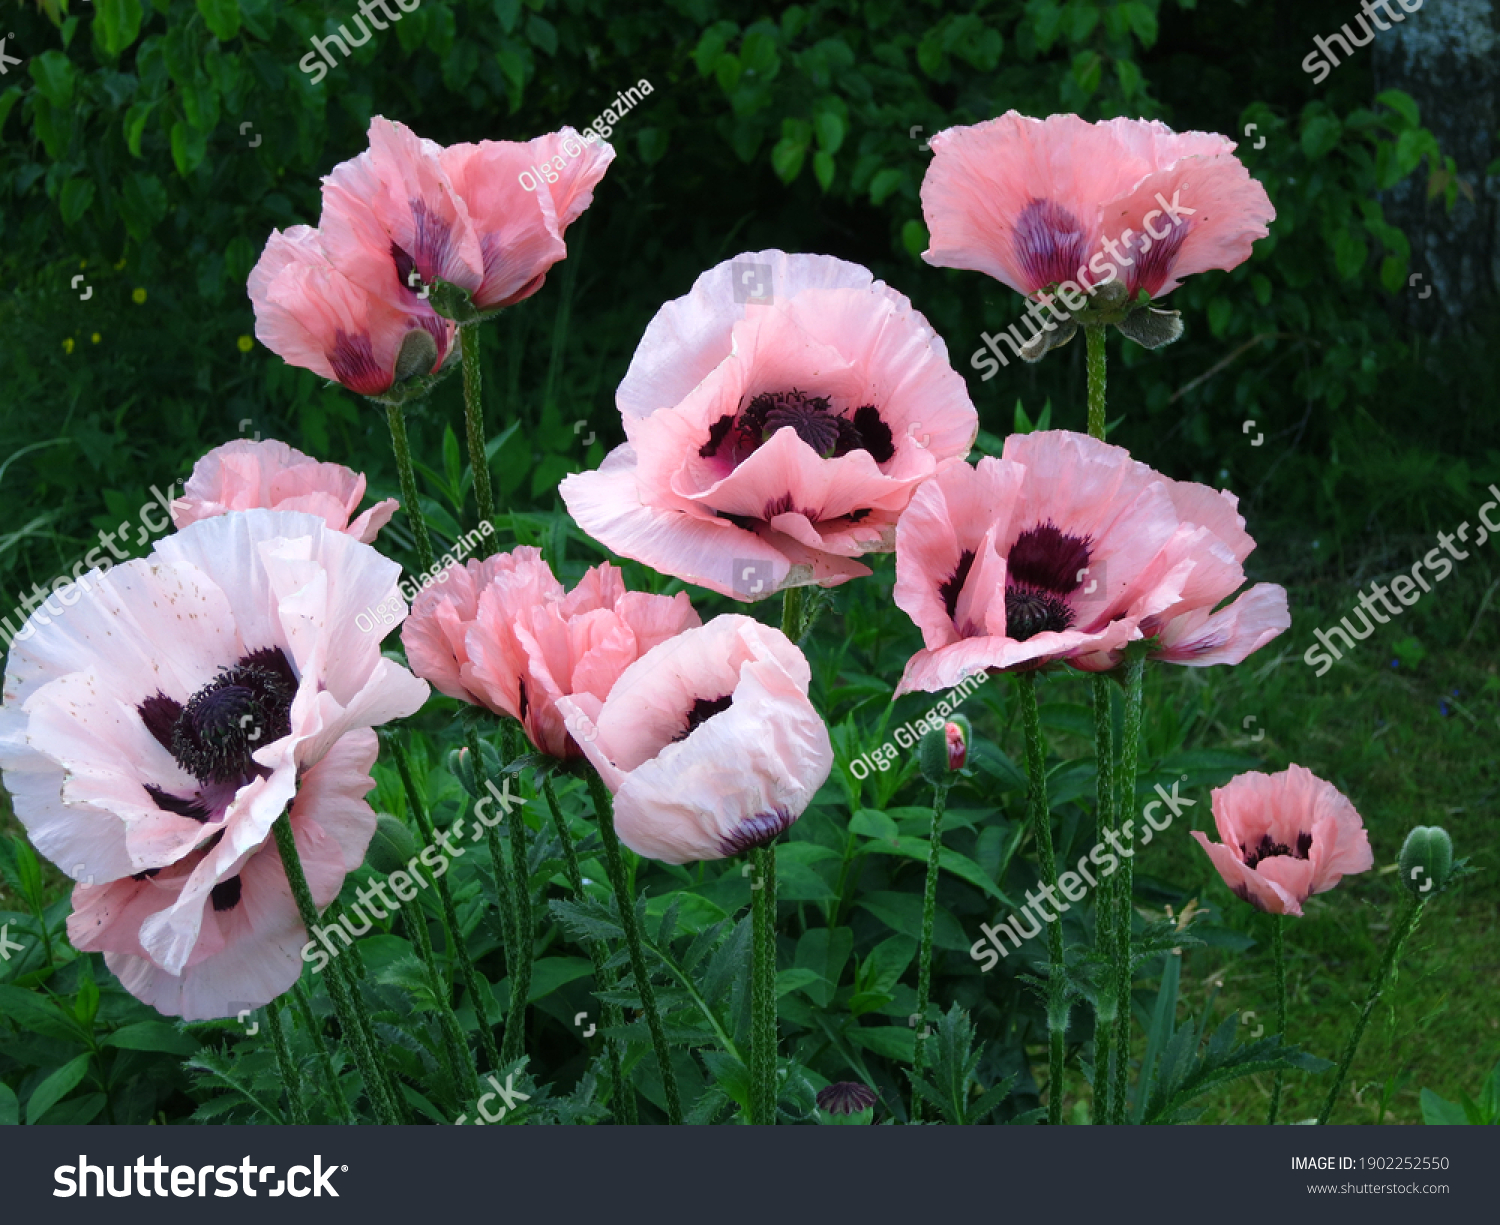 Pink oriental poppy (Papaver orientale) blooms in the garden in June. #1902252550